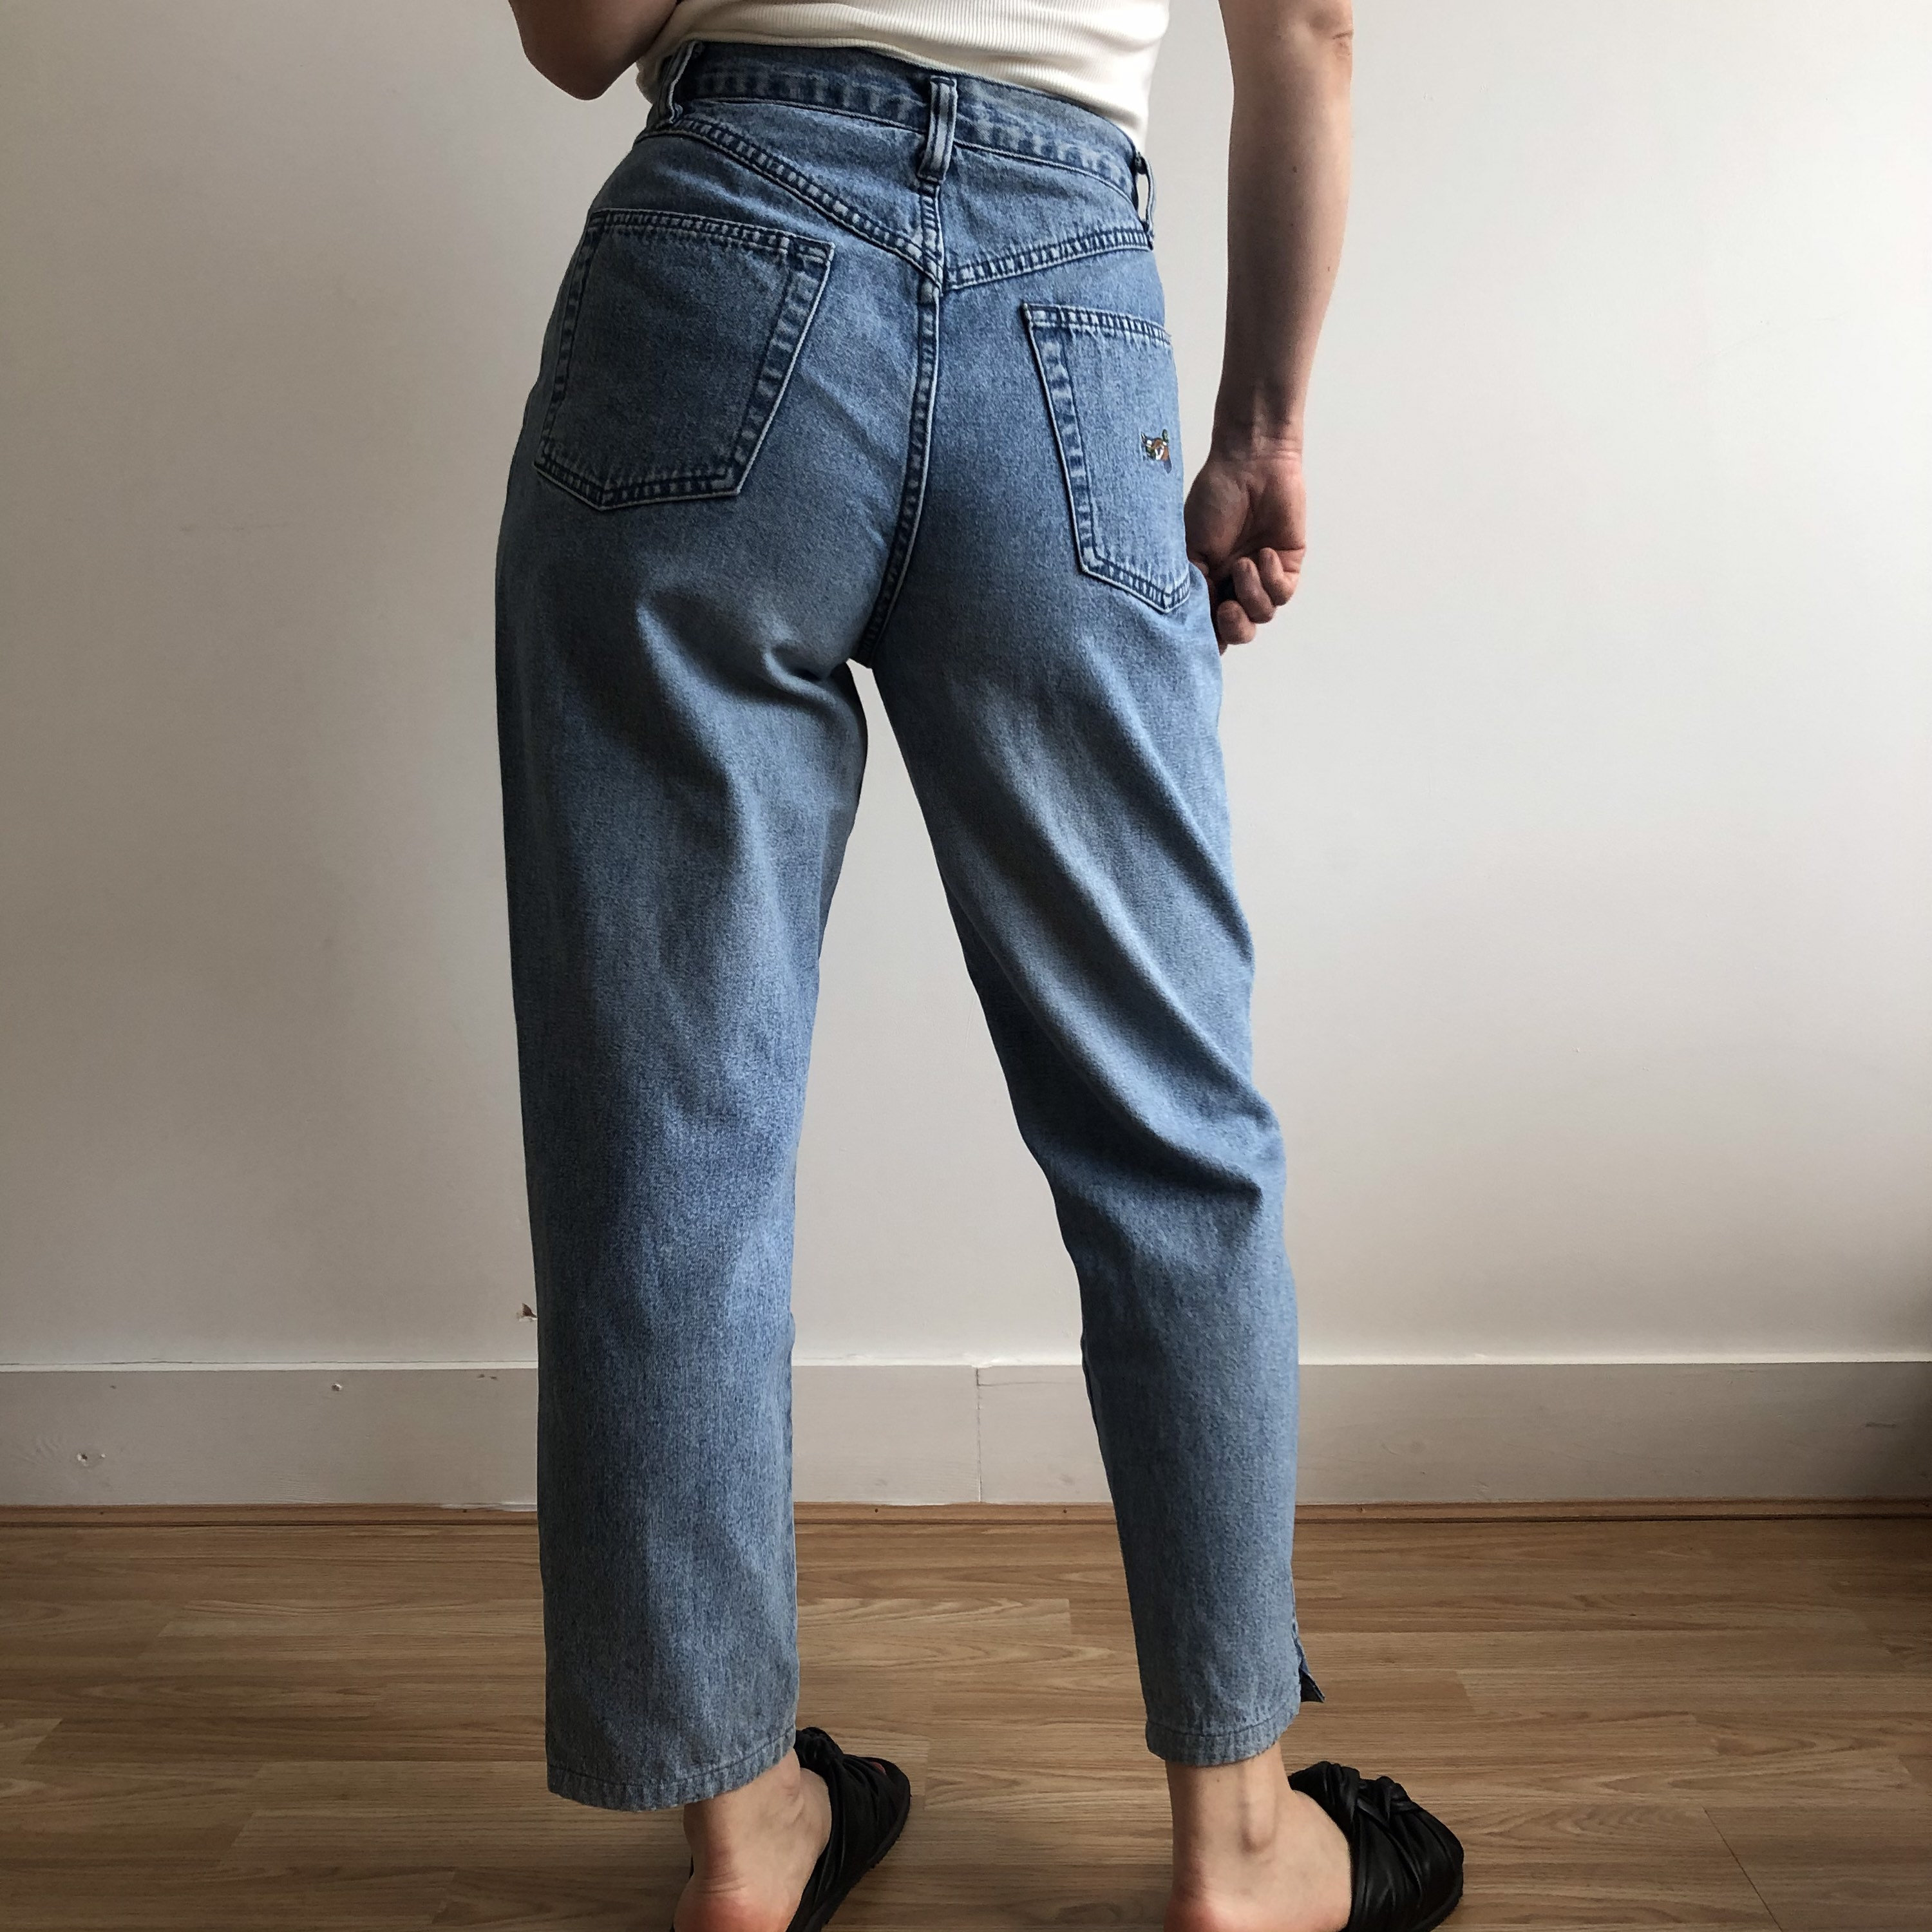 Vintage high waisted jeans. Waist size 28. Late 90s era. | Etsy